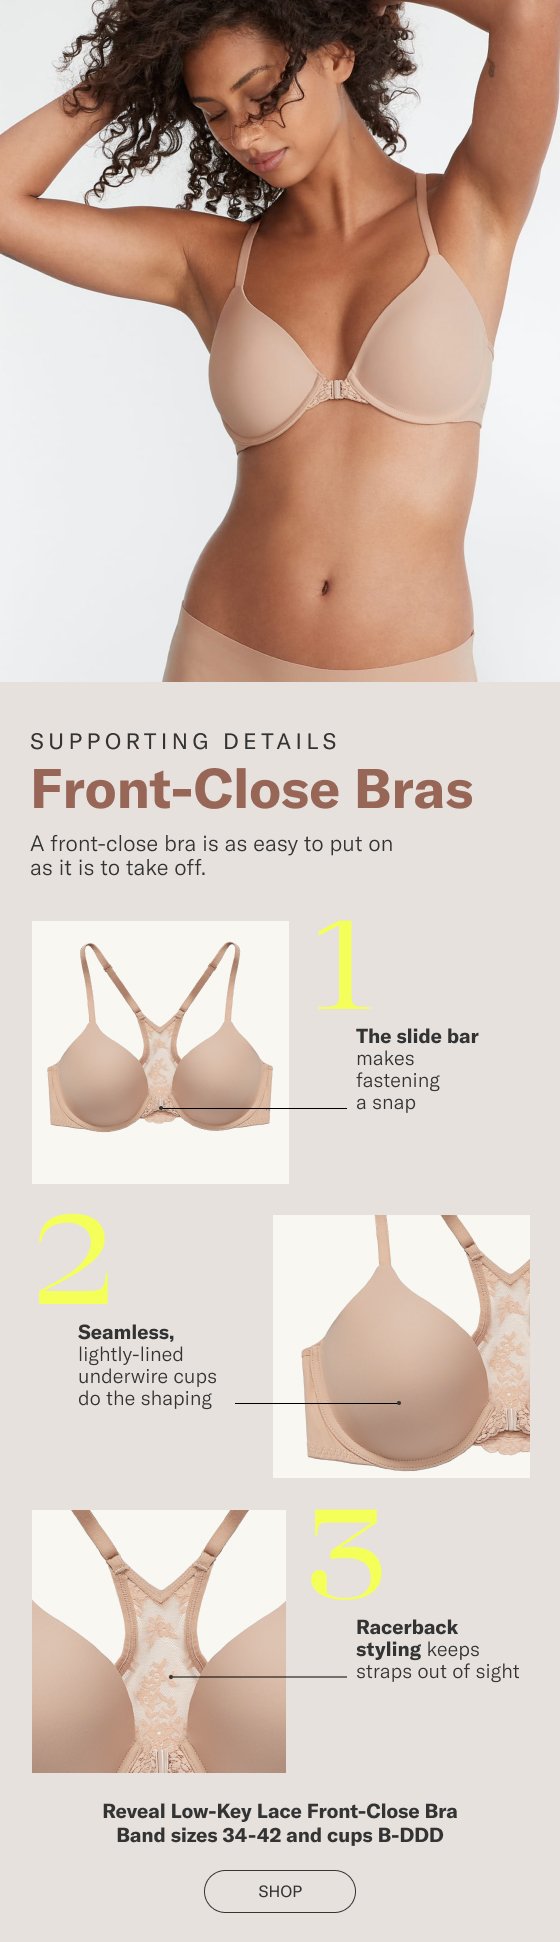 front close bras